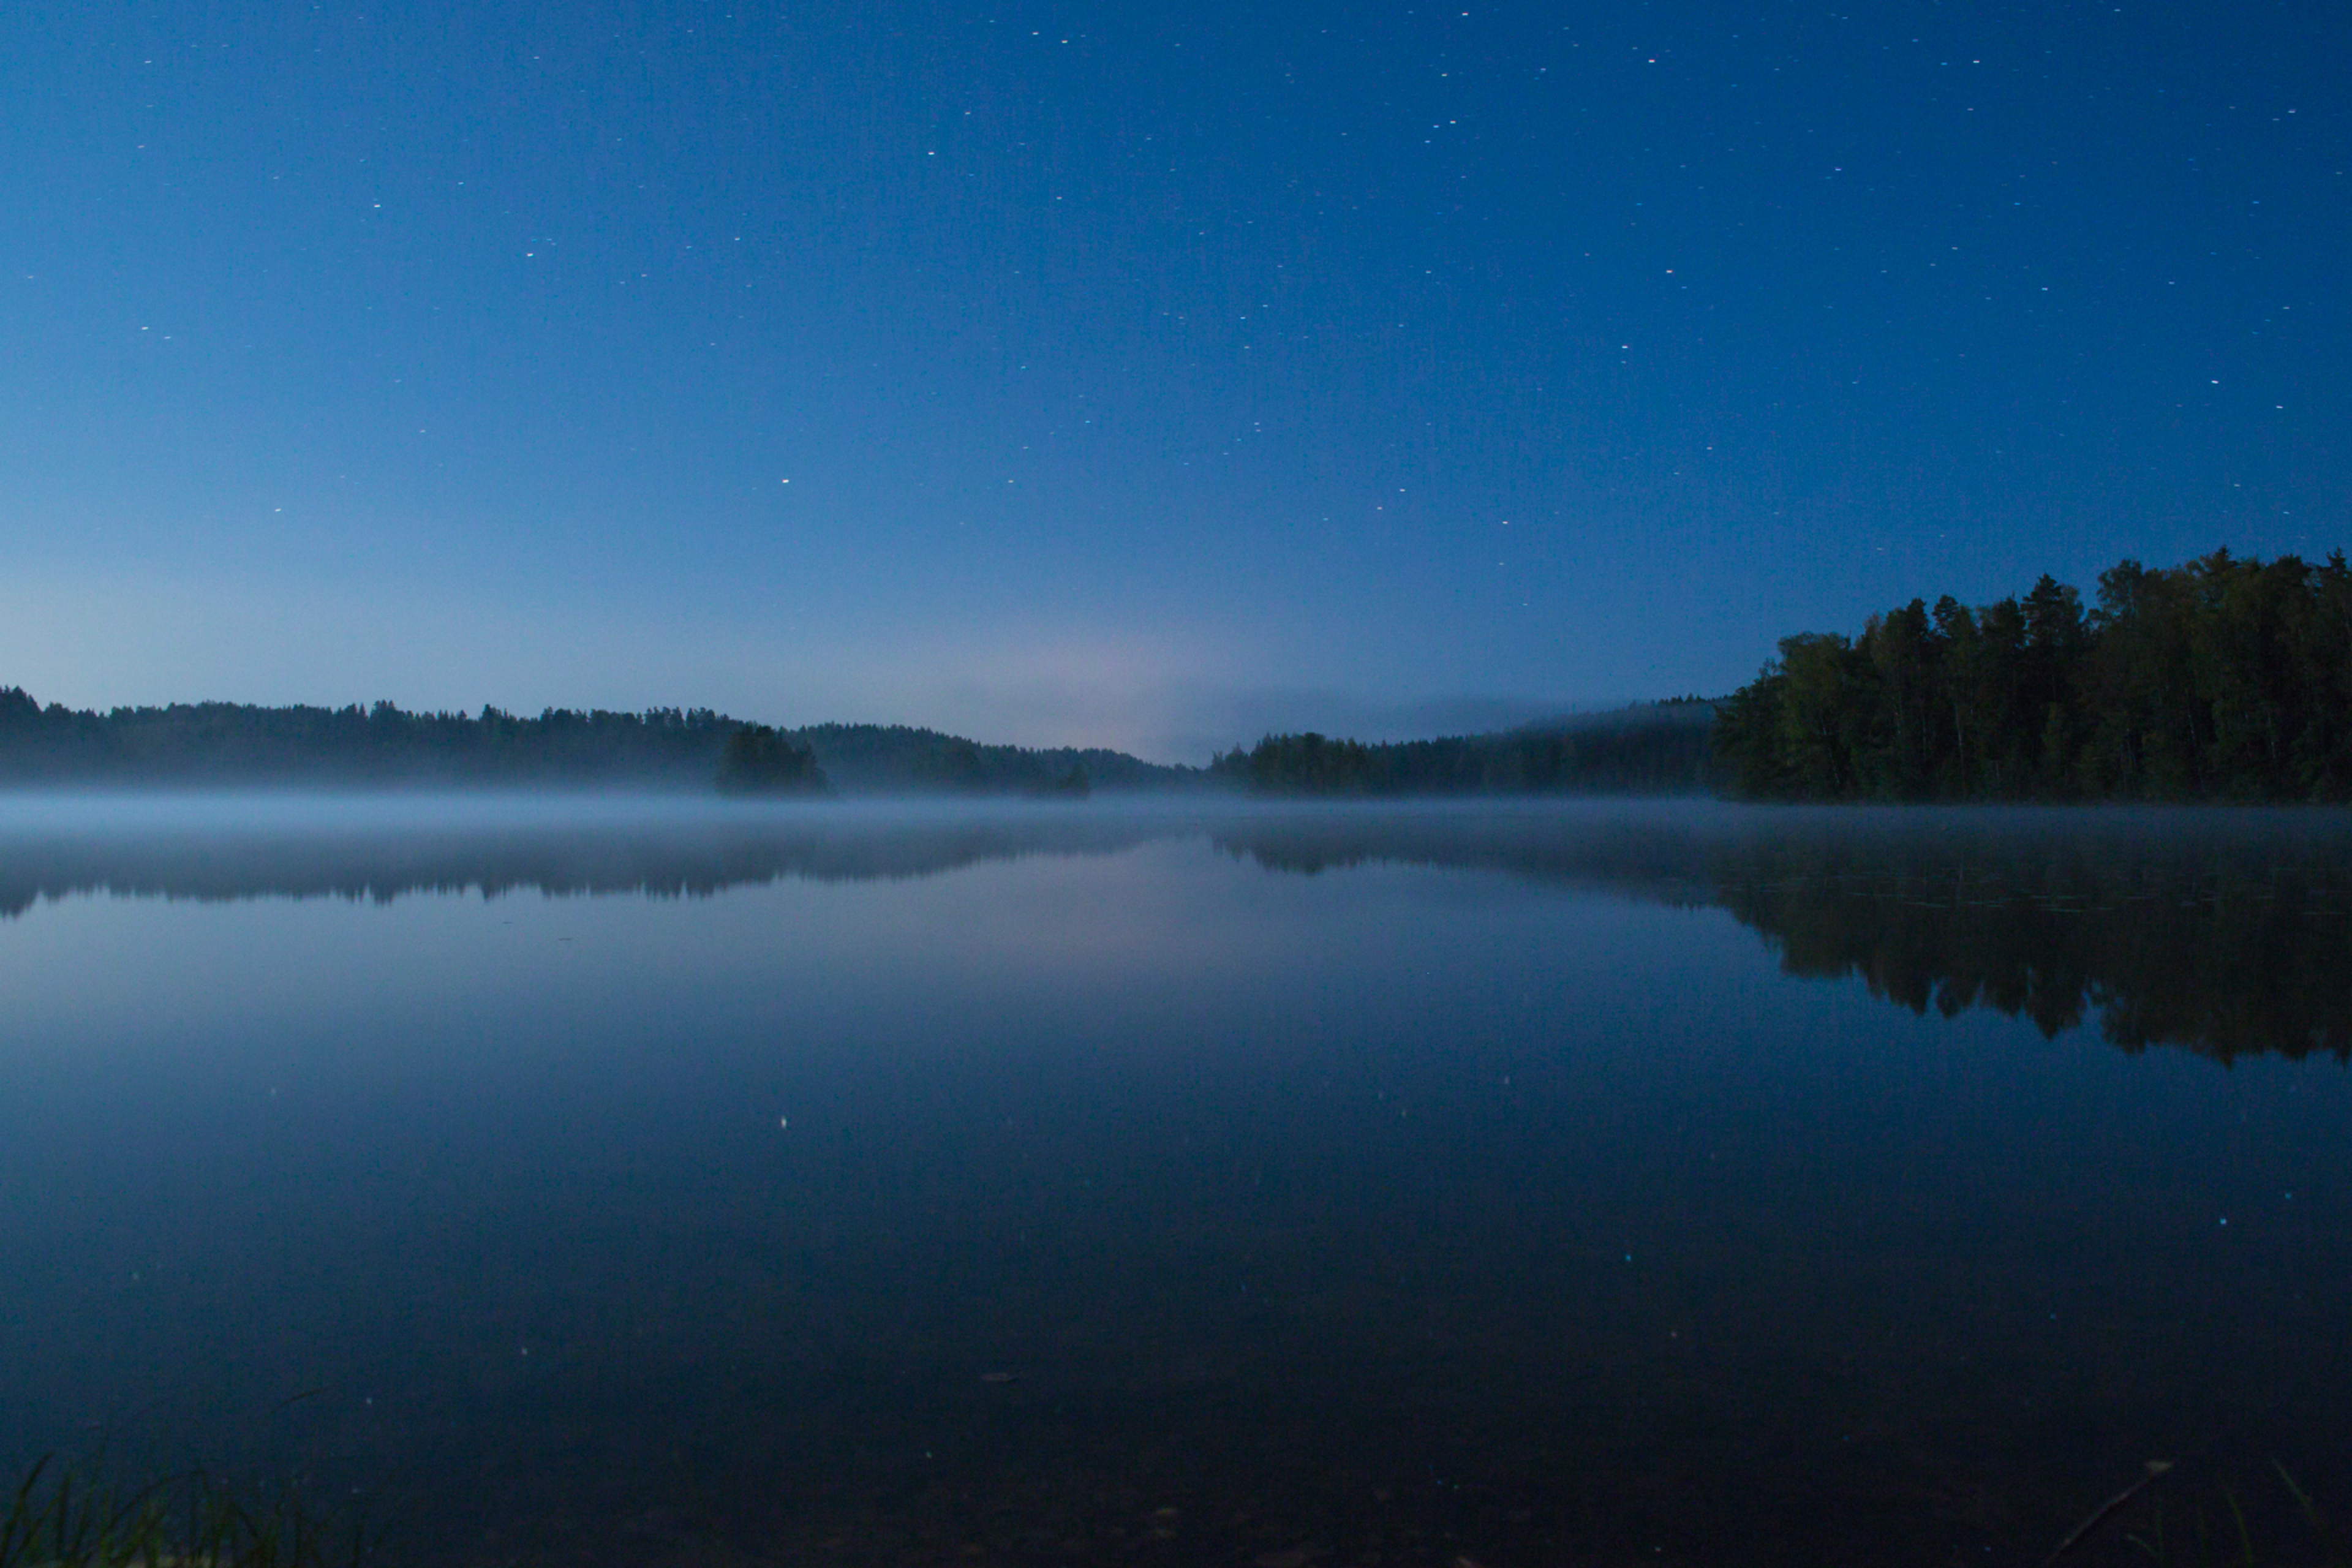 Night Lake - nilikha ni Joel Hypen gamit ang photo